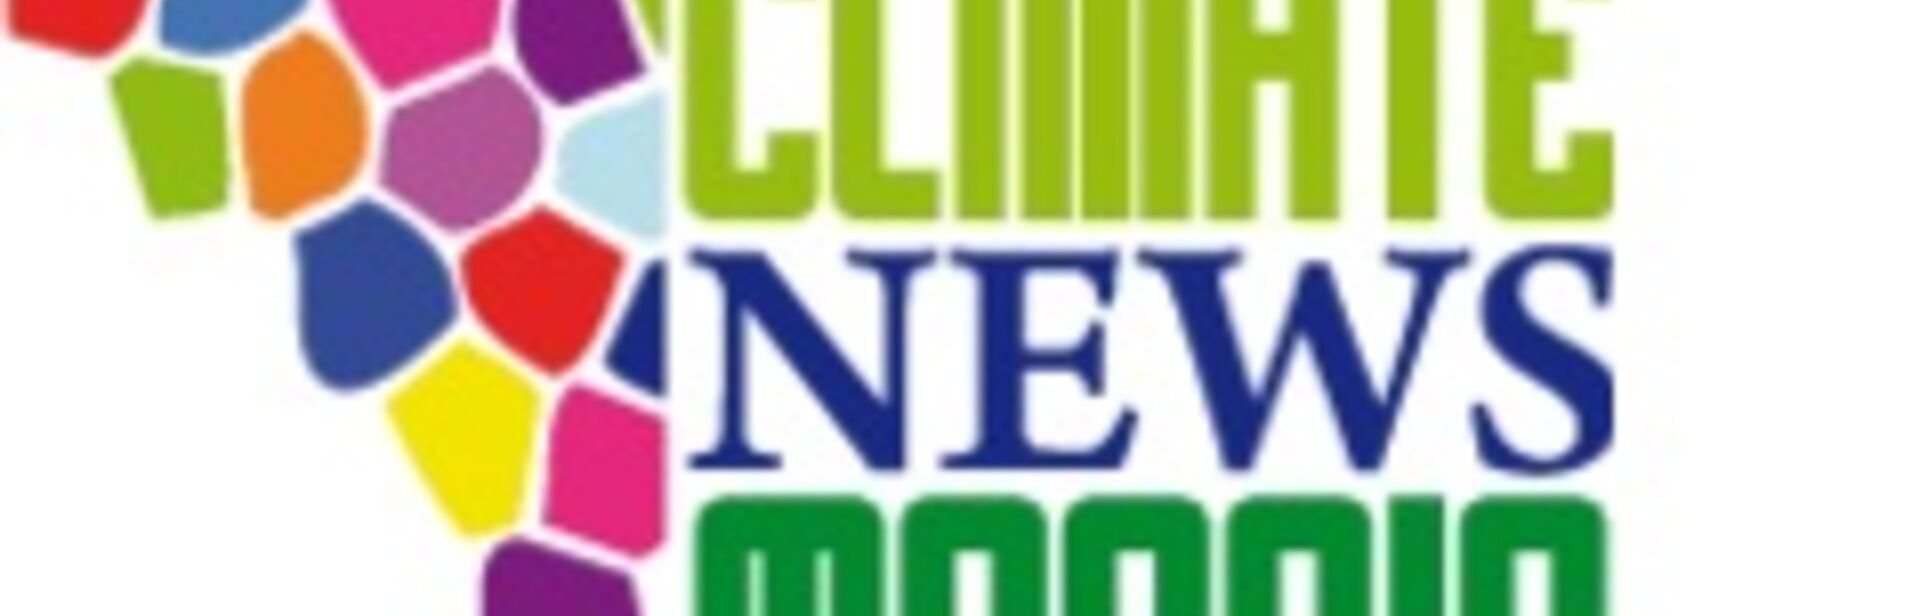 COP19 Climate News Mosaic